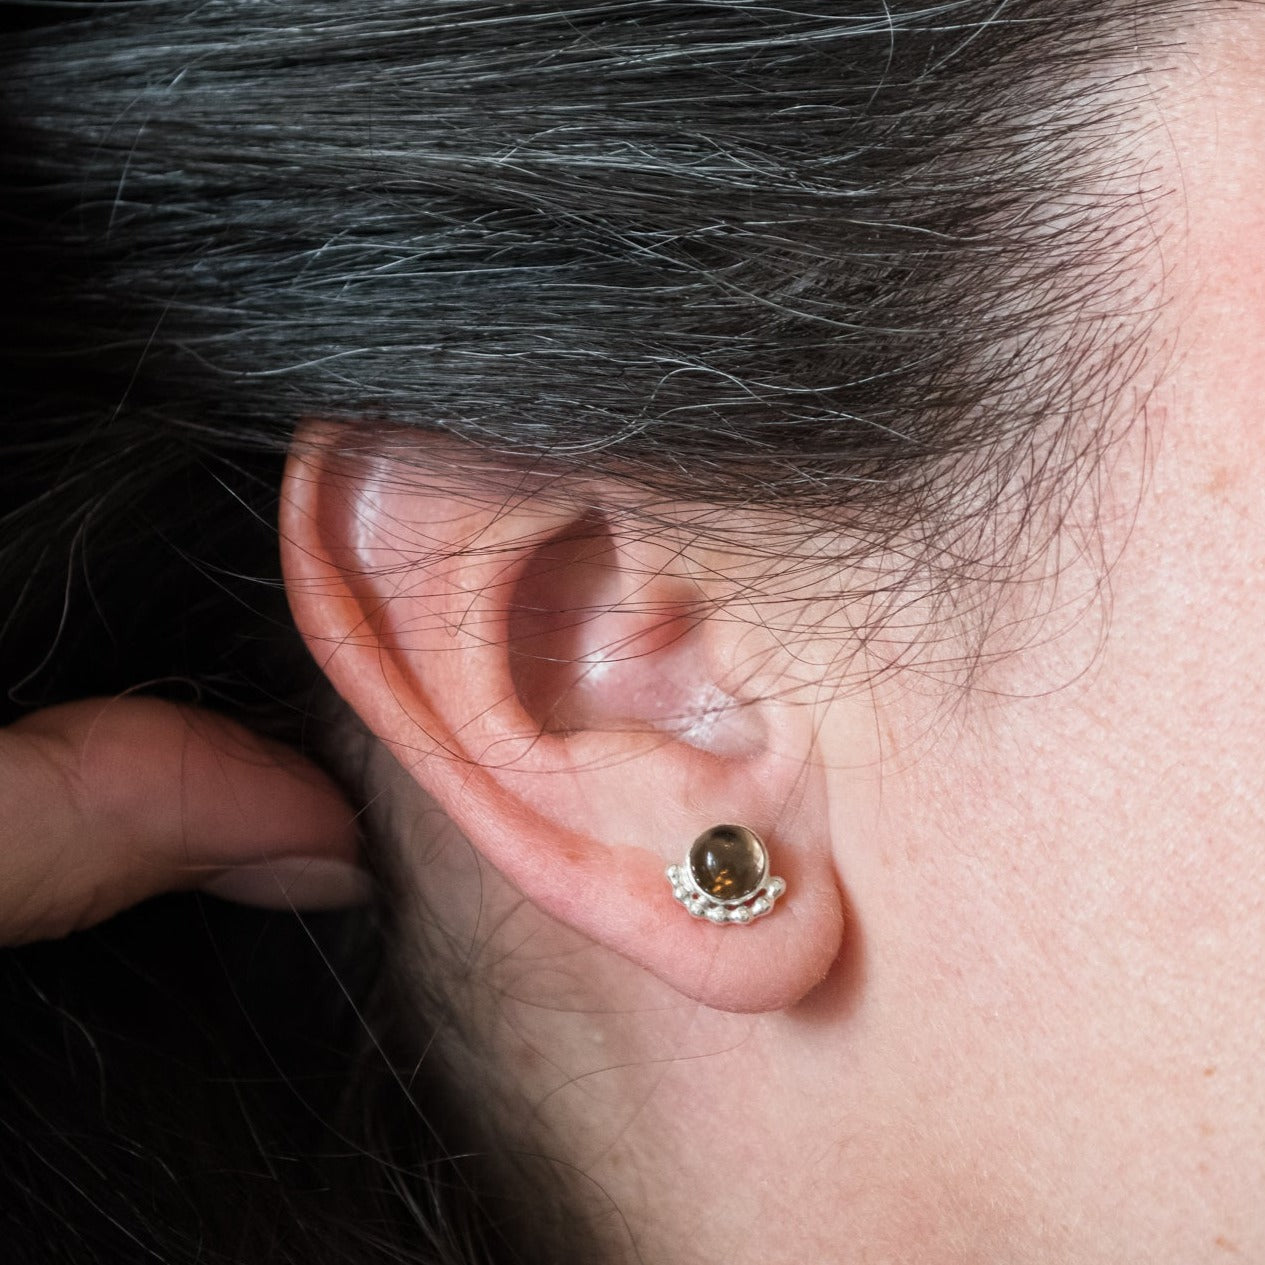 Woman wearing a Large gemstone Eyelash stud earring close up - Trisha Flanagan